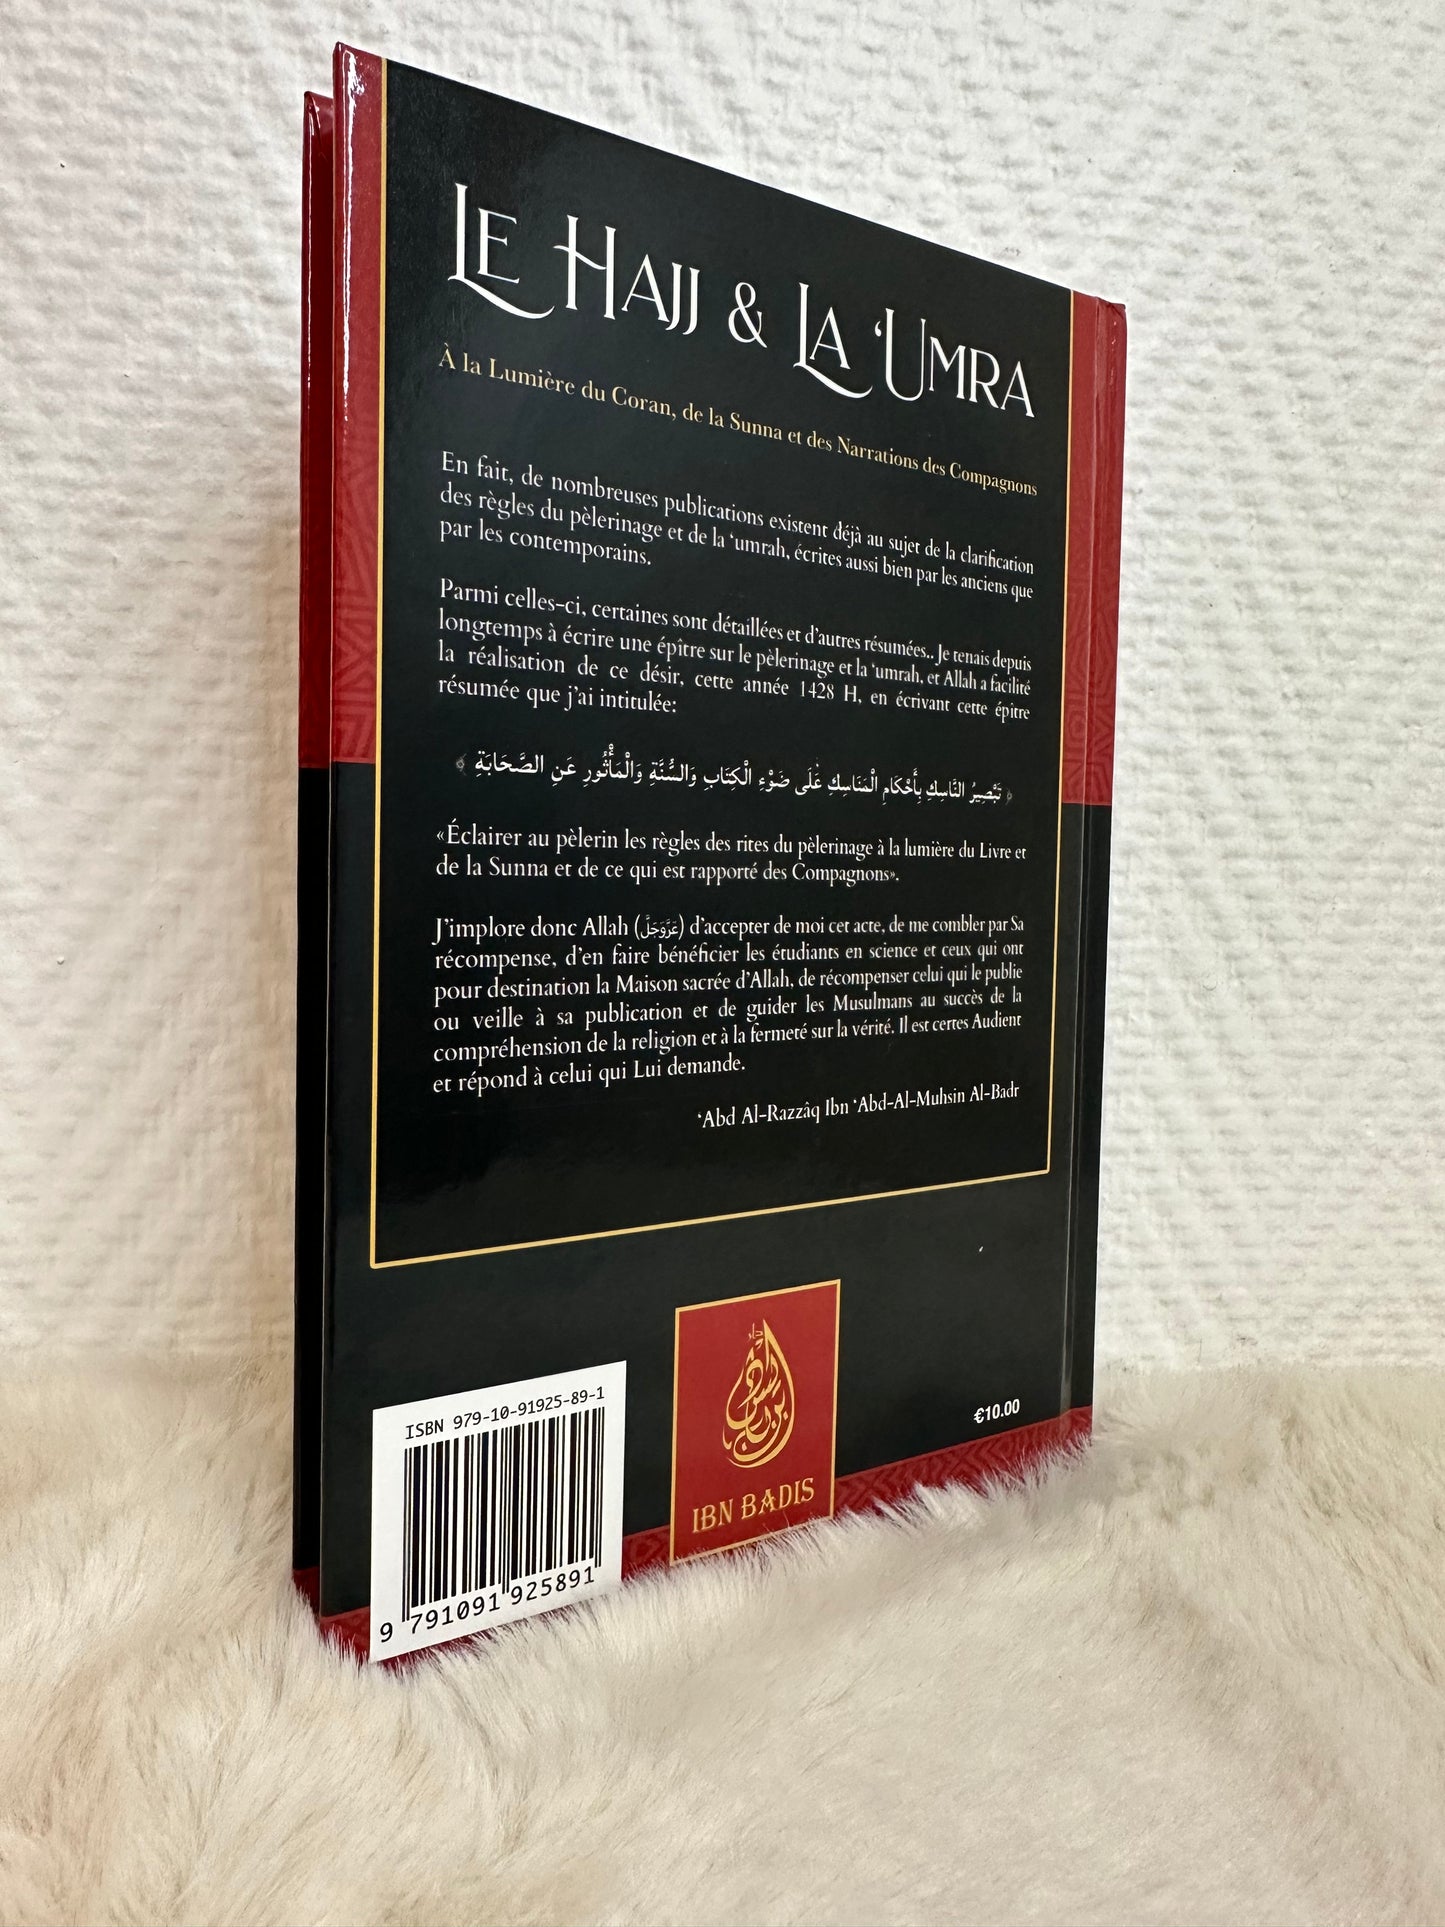 Le Hajj & La ‘Umra À La Lumière Du Coran Et De La Sunna Et Des Narrations Des Compagnons, De Abd Al-Muhsin Al-'Abbâd Al-Badr